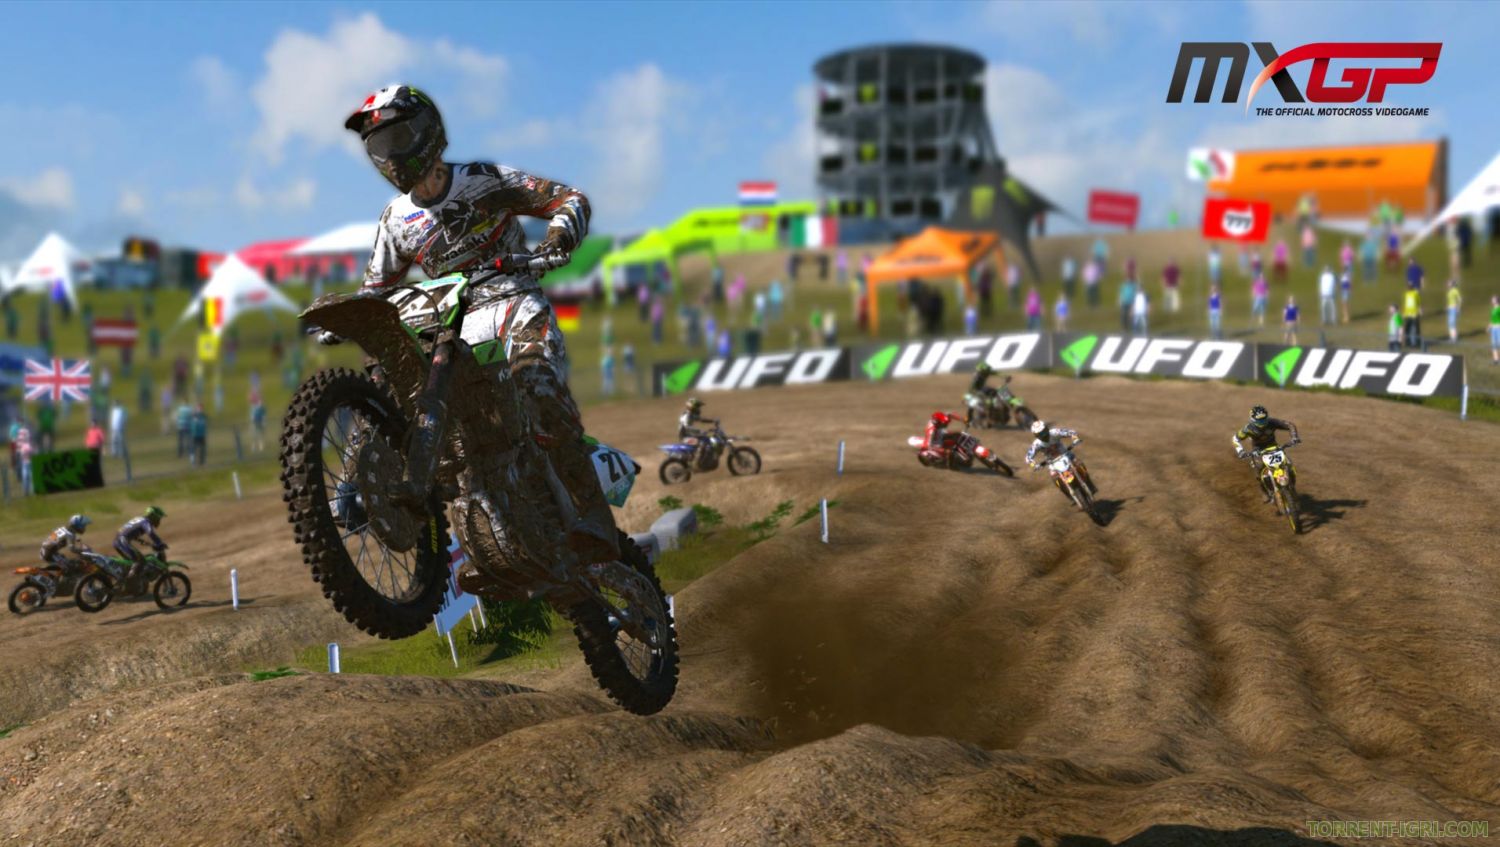 Скриншот 1 к игре MXGP - The Official Motocross Videogame (2014) PC | Repack от xatab